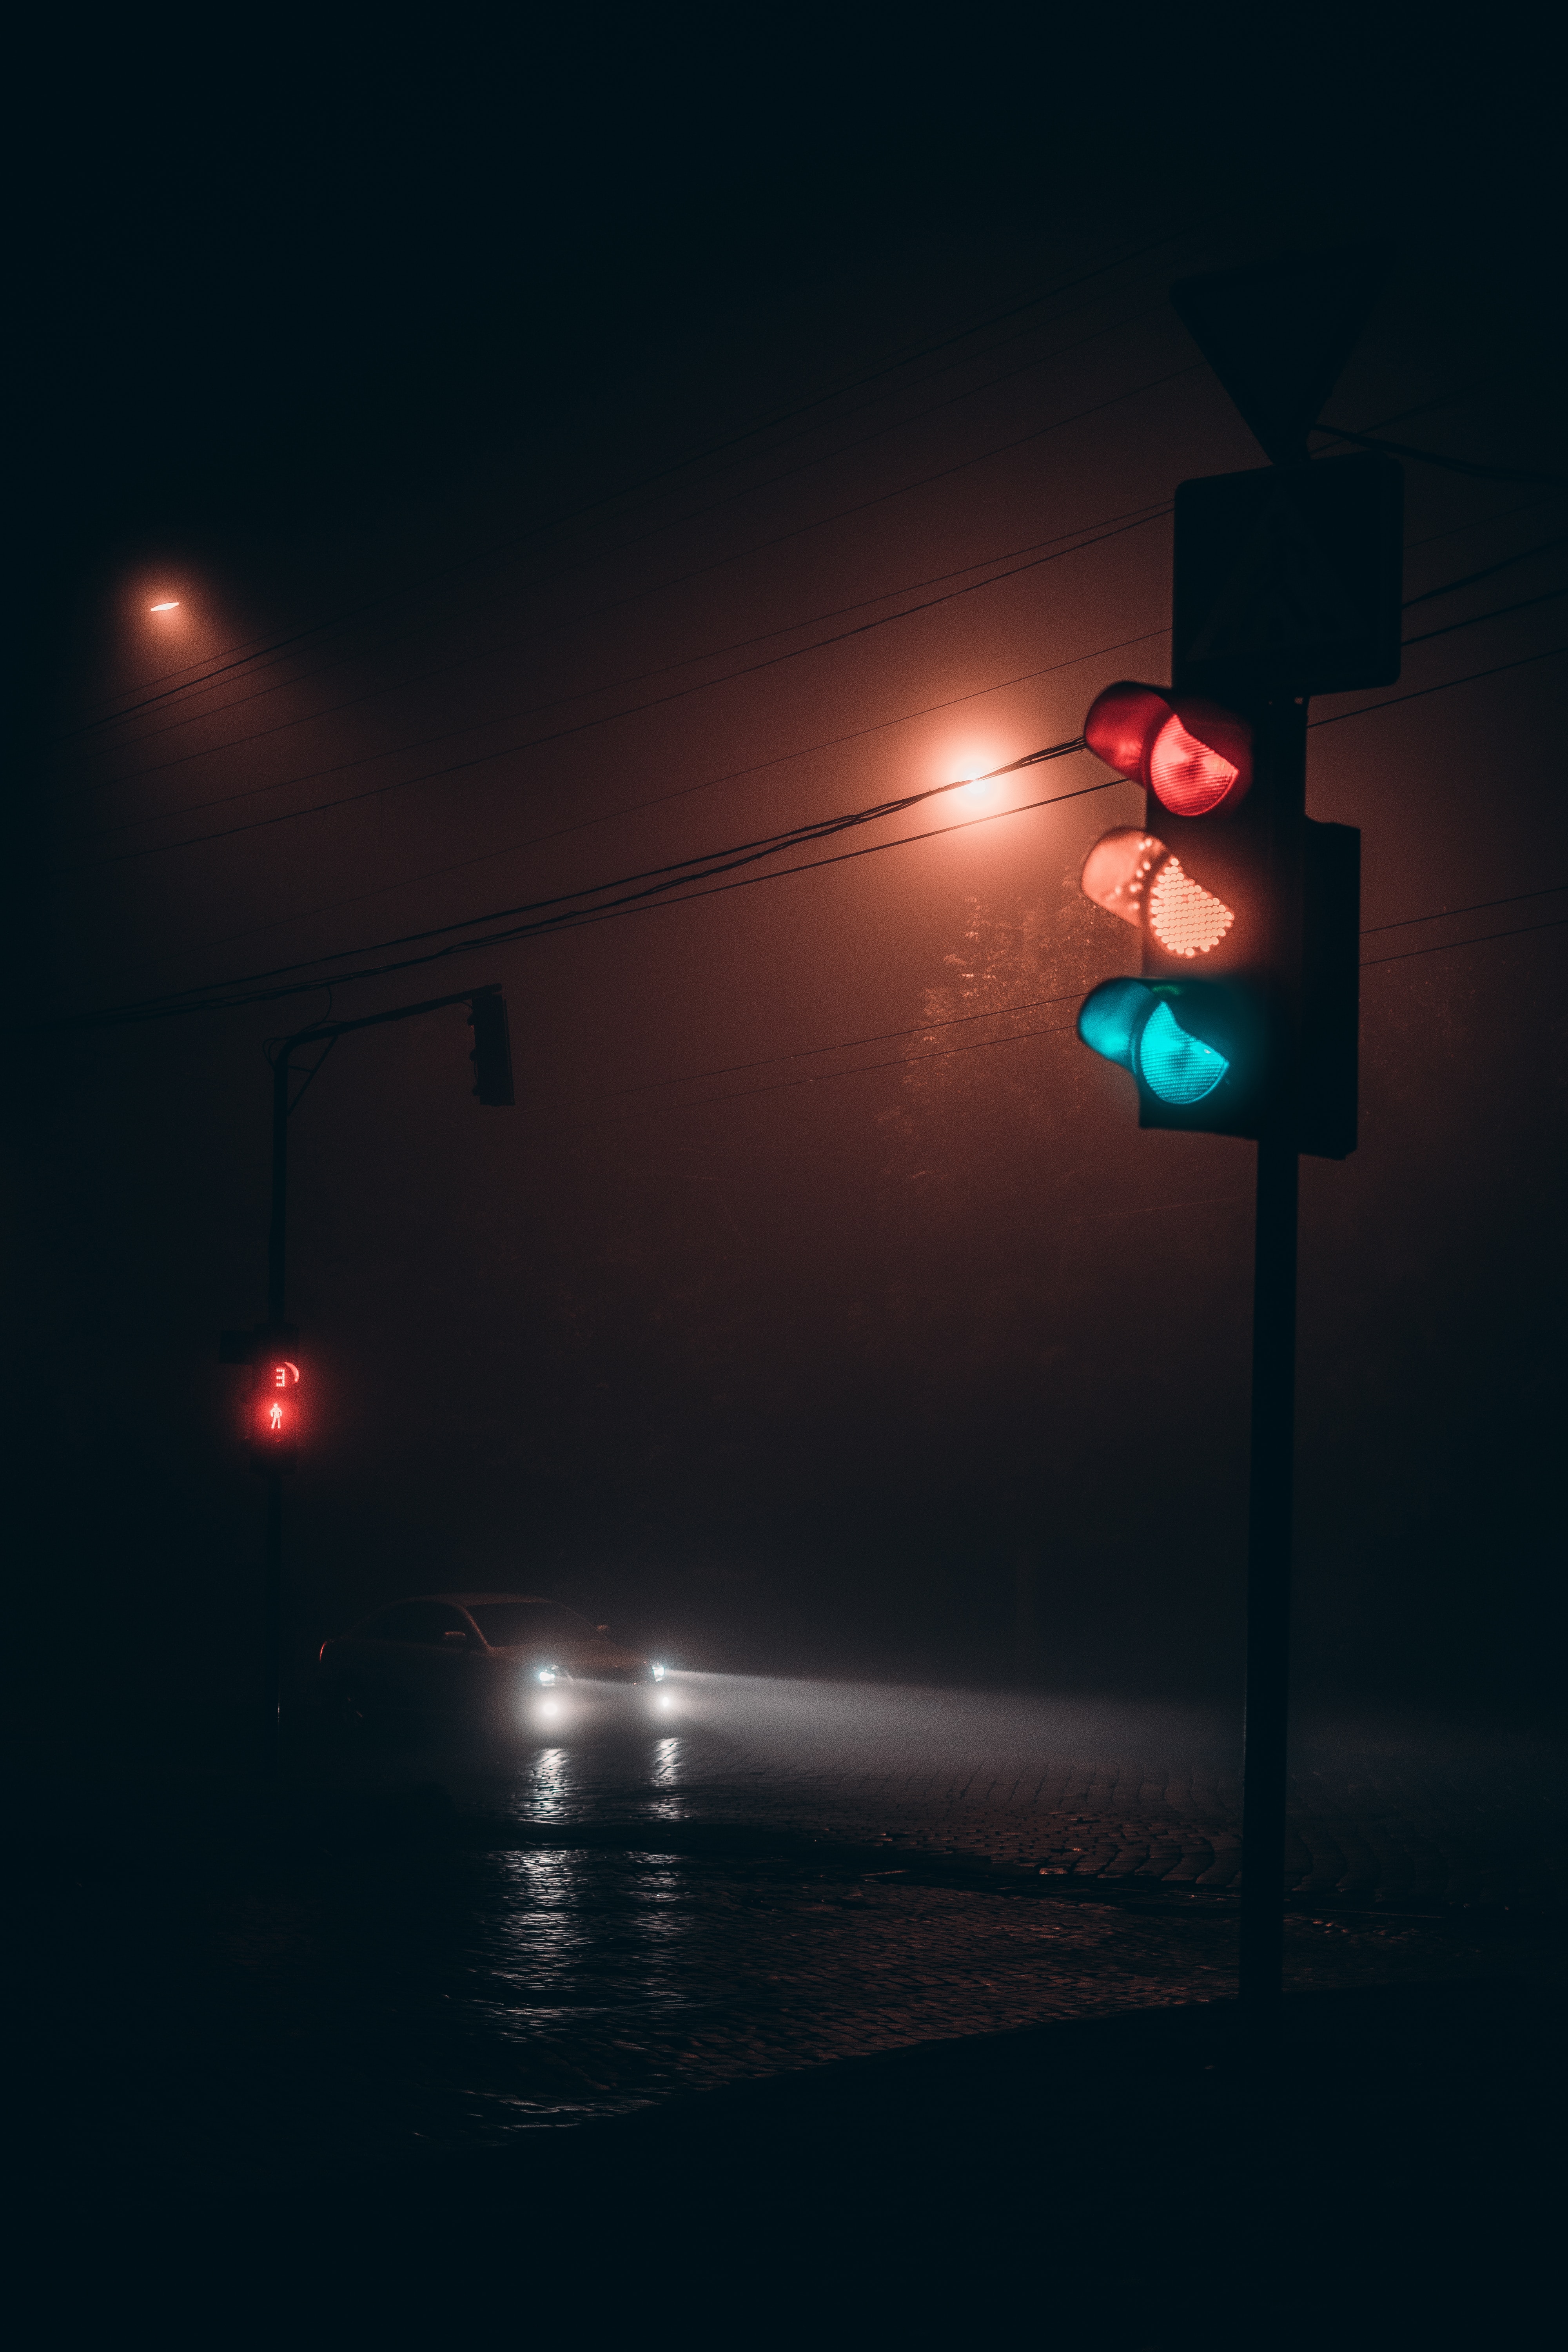 dark, machine, cities, night, road, fog, car, traffic light